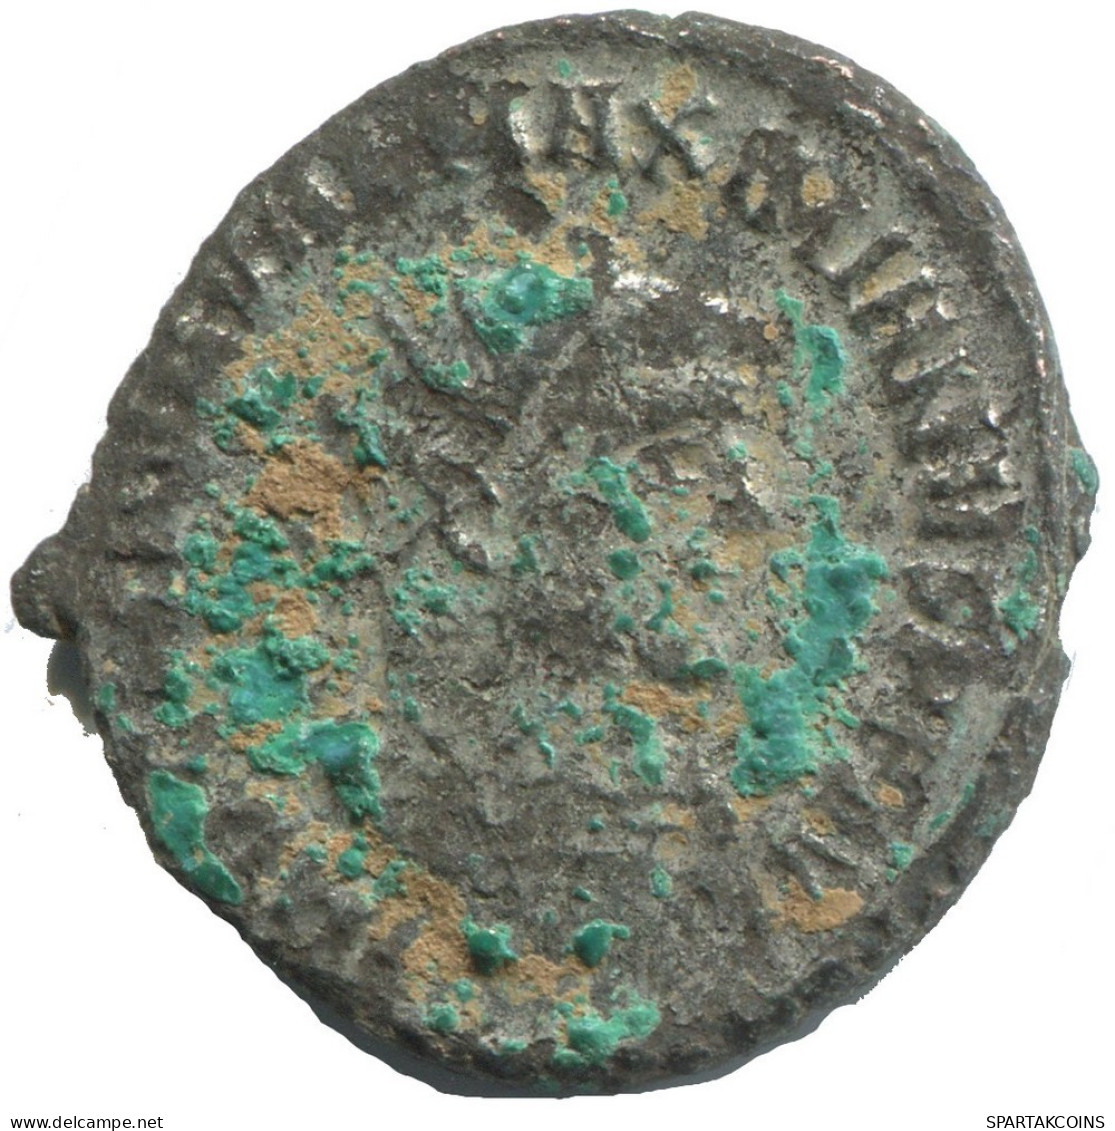 MAXIMIANUS SISCIA S XXI AD285-295 SILVERED ROMAN Moneda 3.6g/21mm #ANT2680.41.E.A - La Tétrarchie (284 à 307)